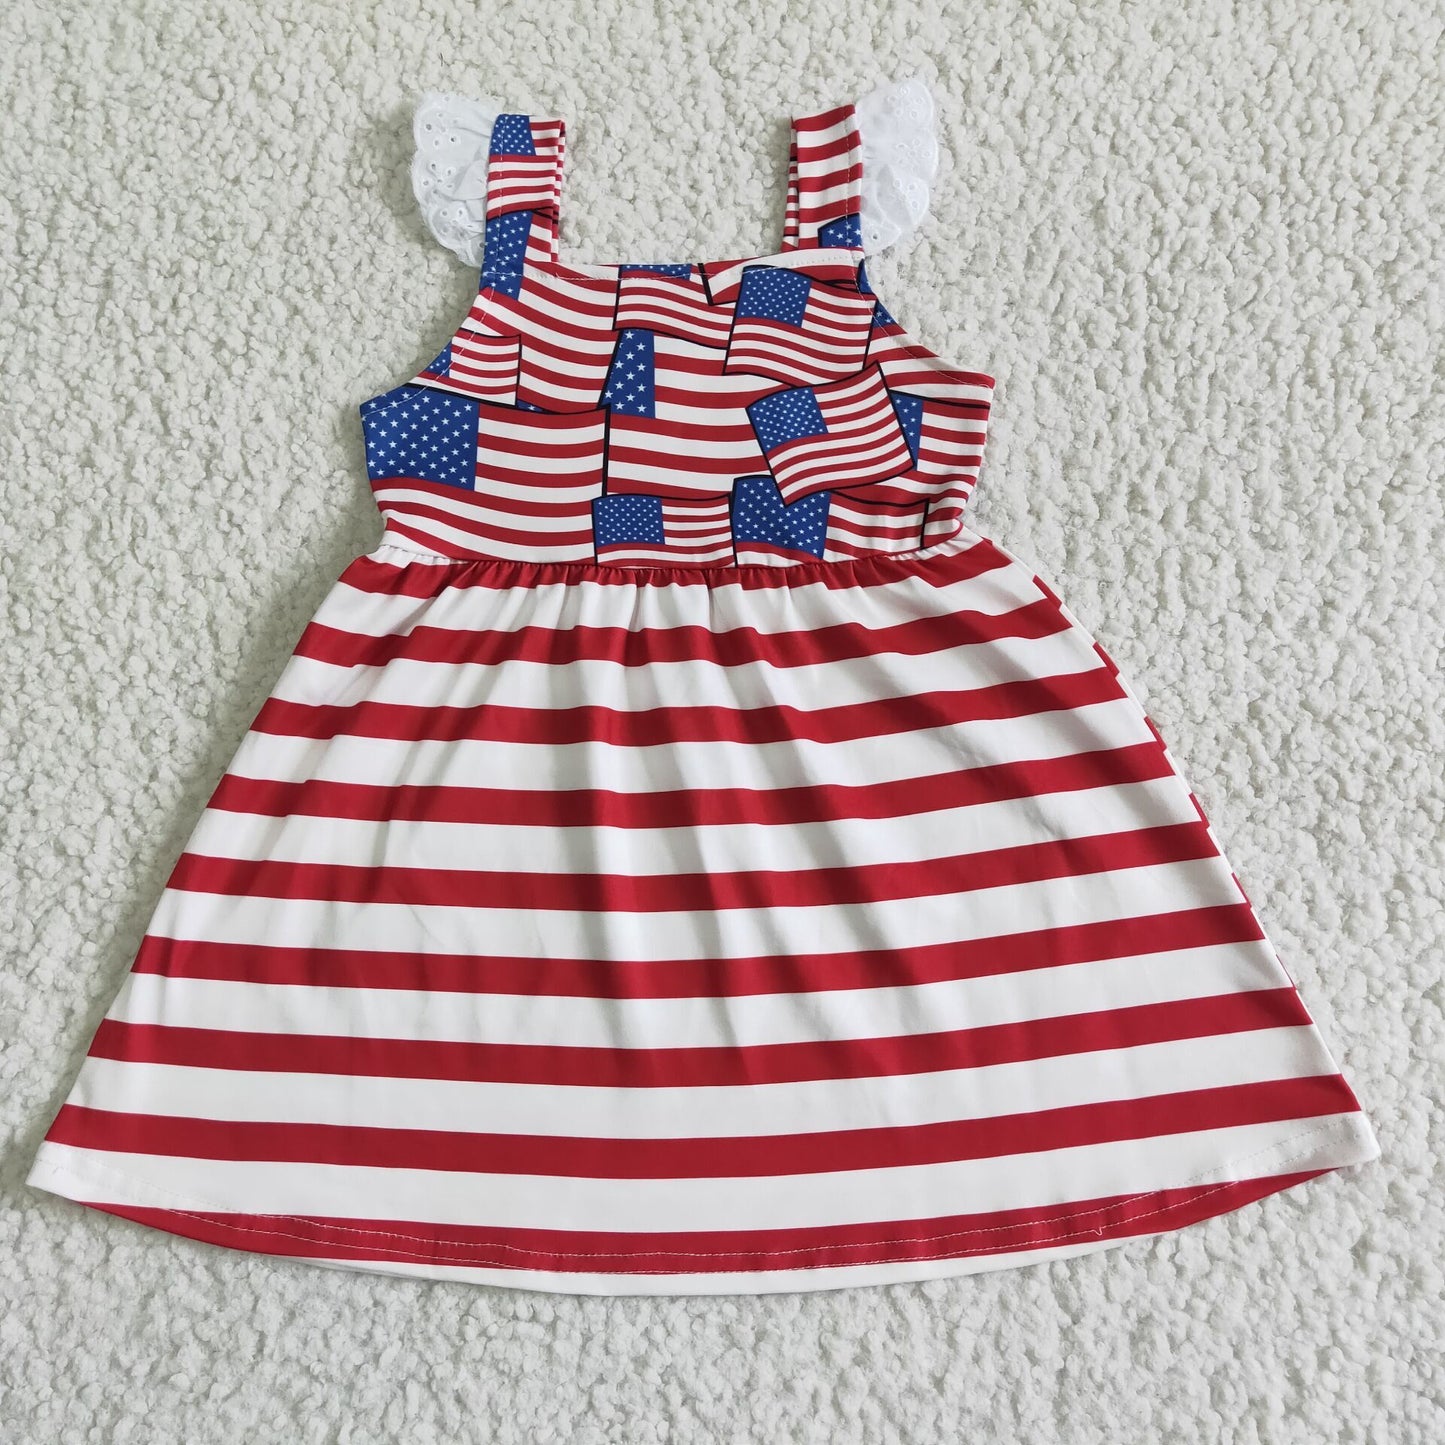 Flag print sleeveless stripe baby girls dependence day 4th of july dresses